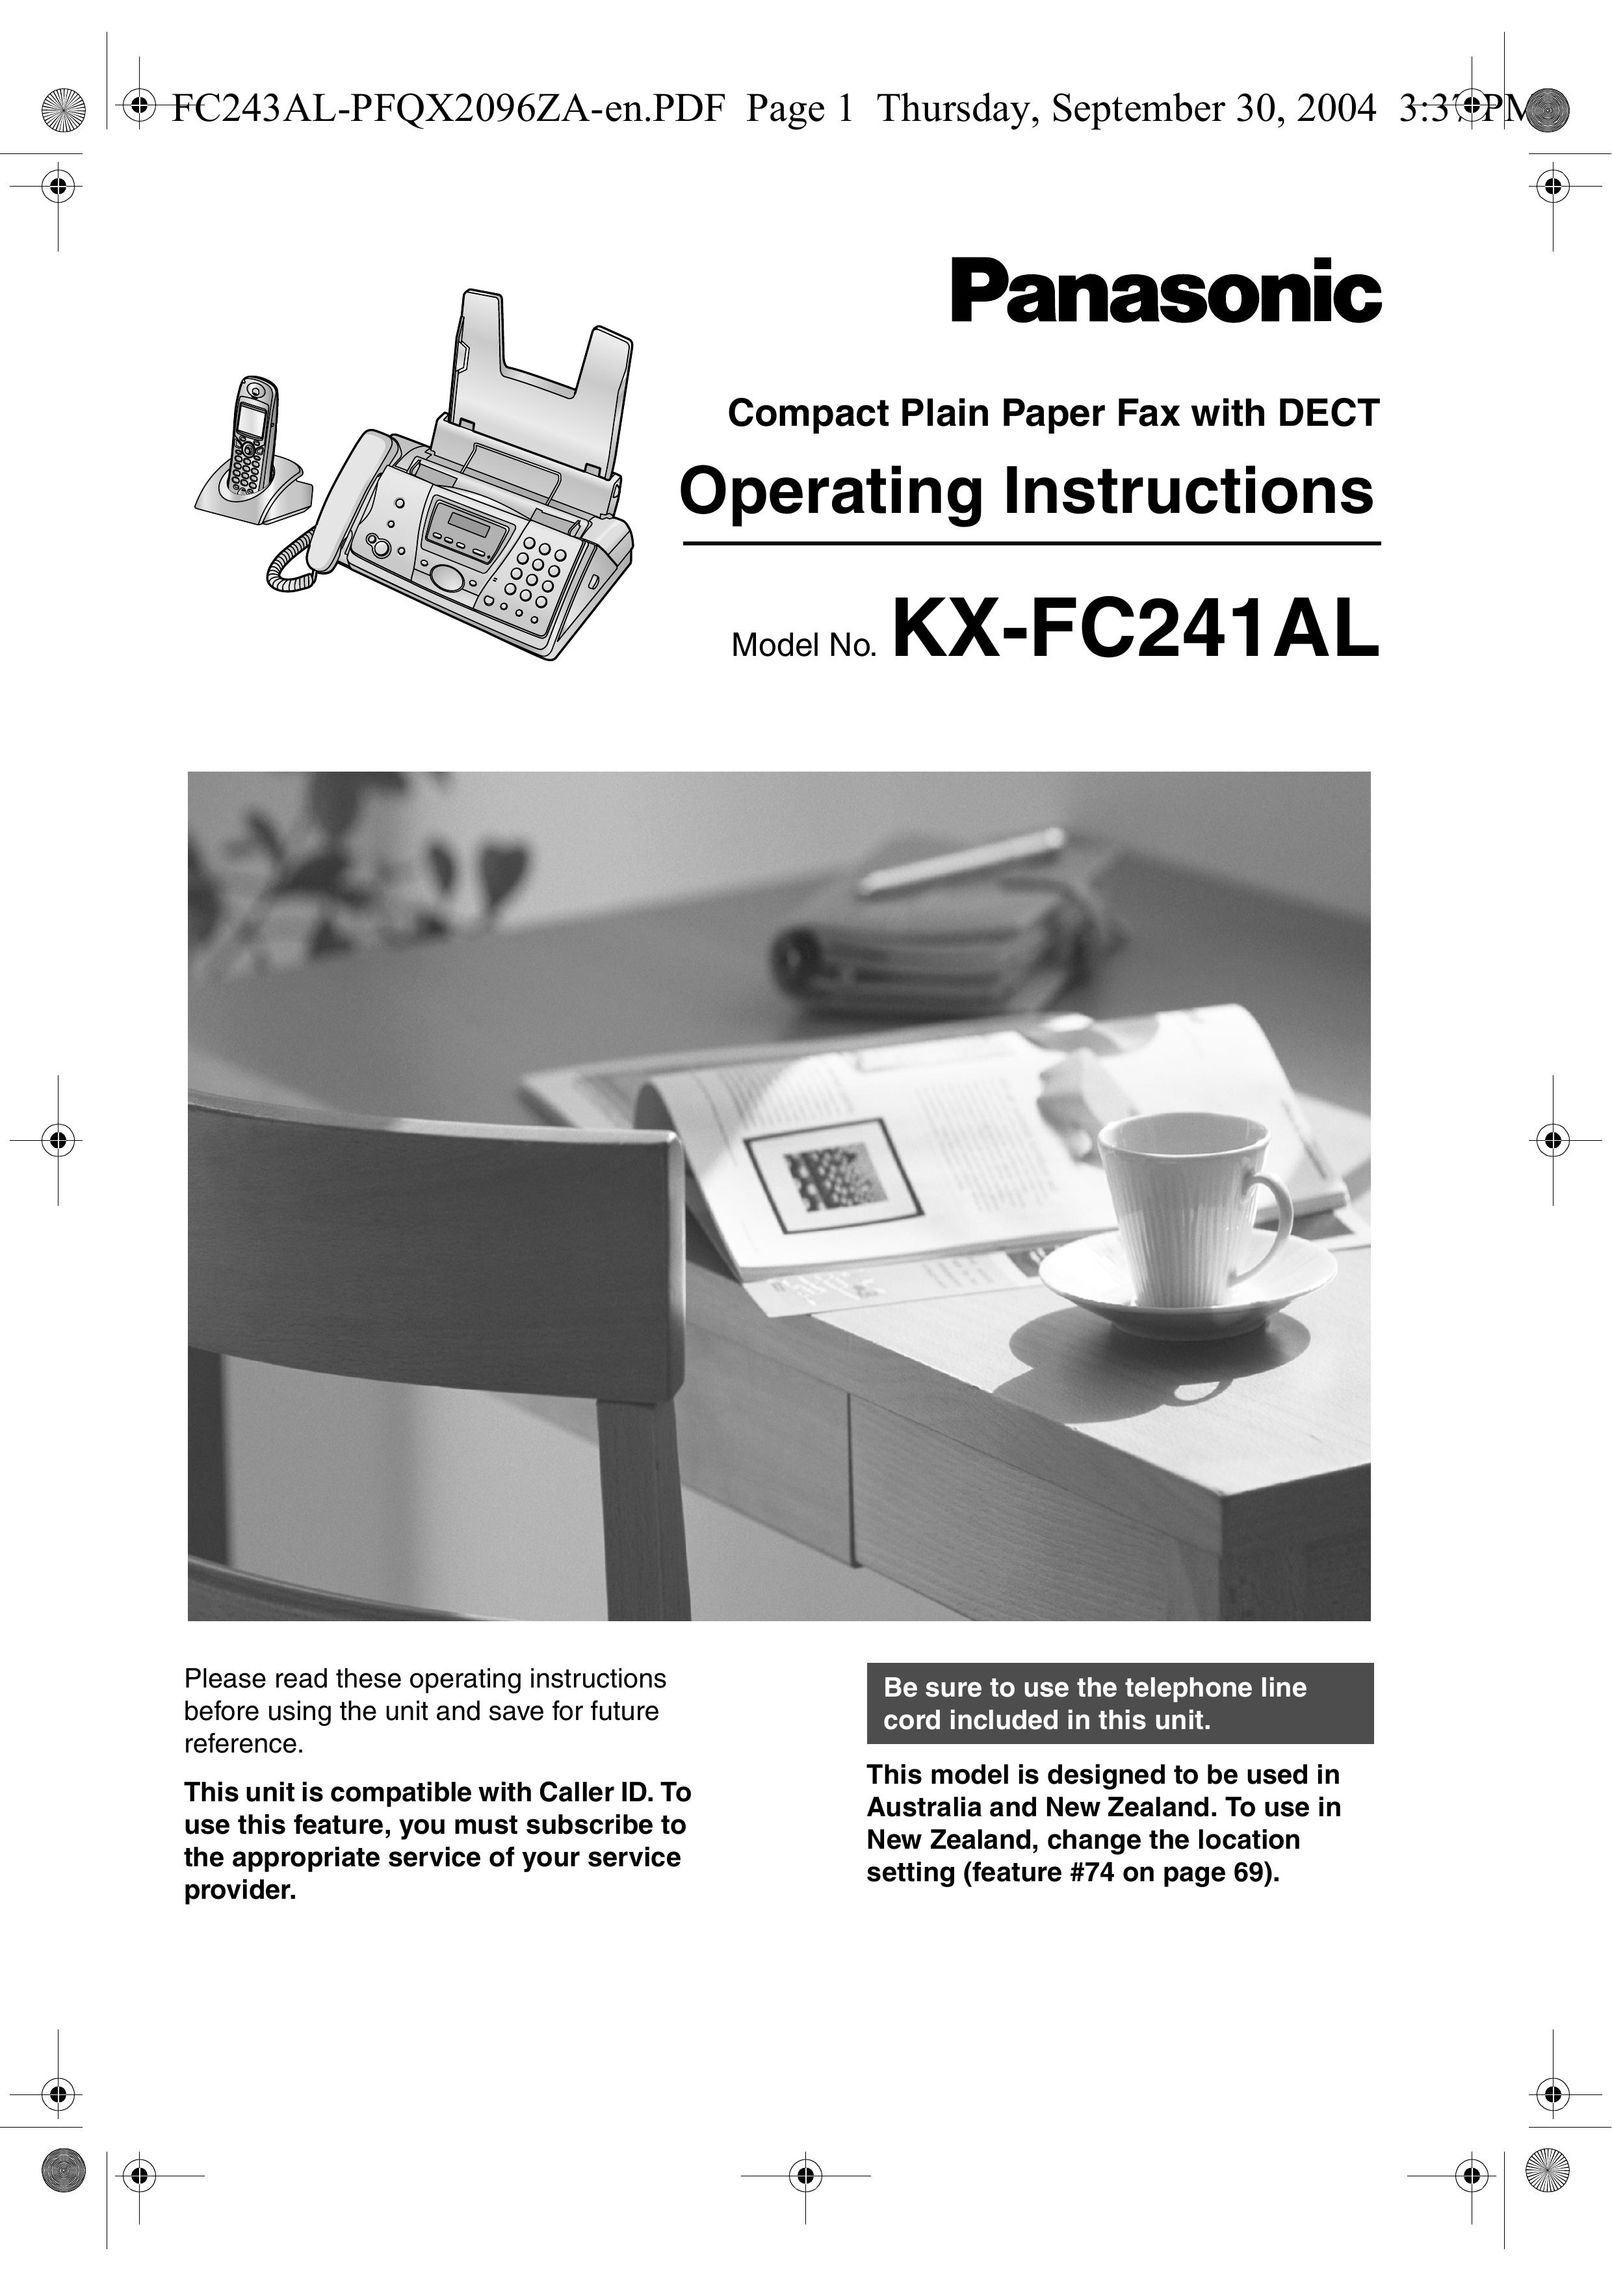 Panasonic KX-FC241AL Fax Machine User Manual